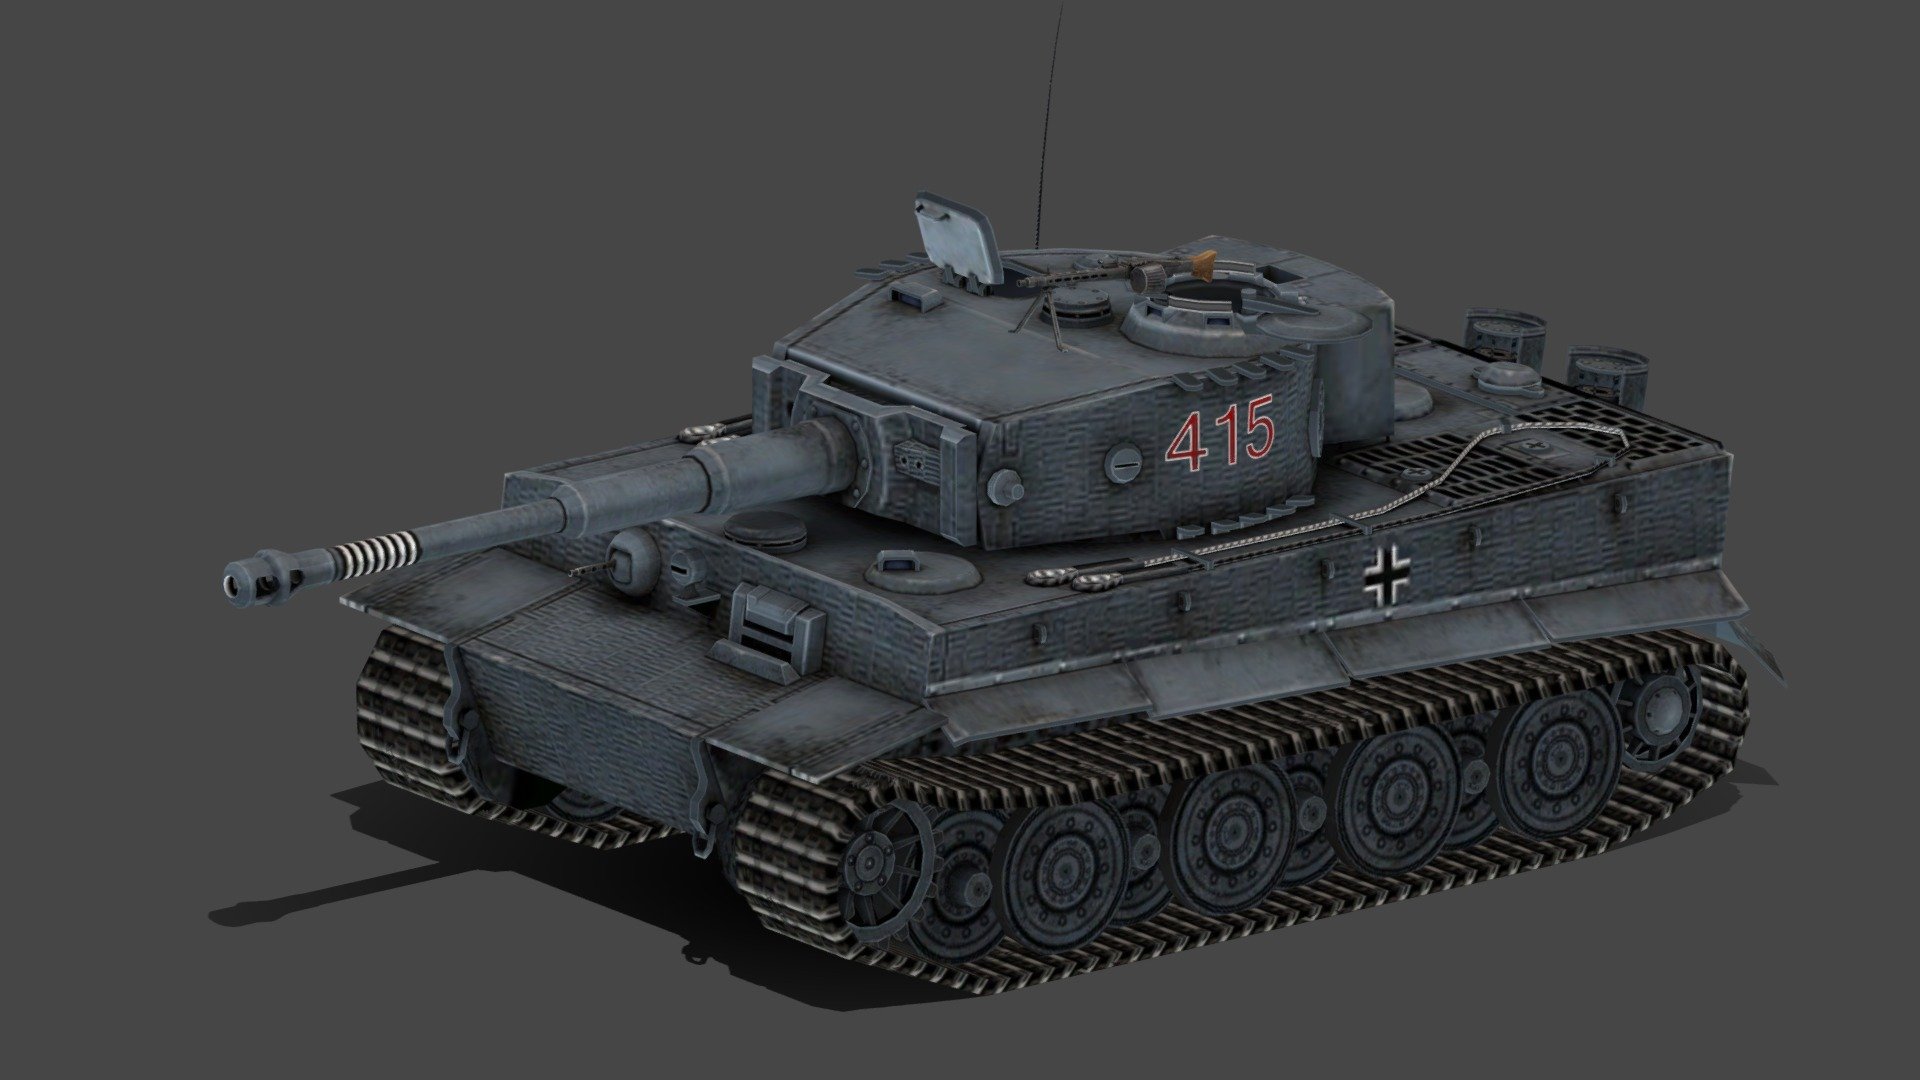 The Tiger II was a German heavy tank of the Second World War. The final official German designation was Panzerkampfwagen Tiger Ausf 3d model